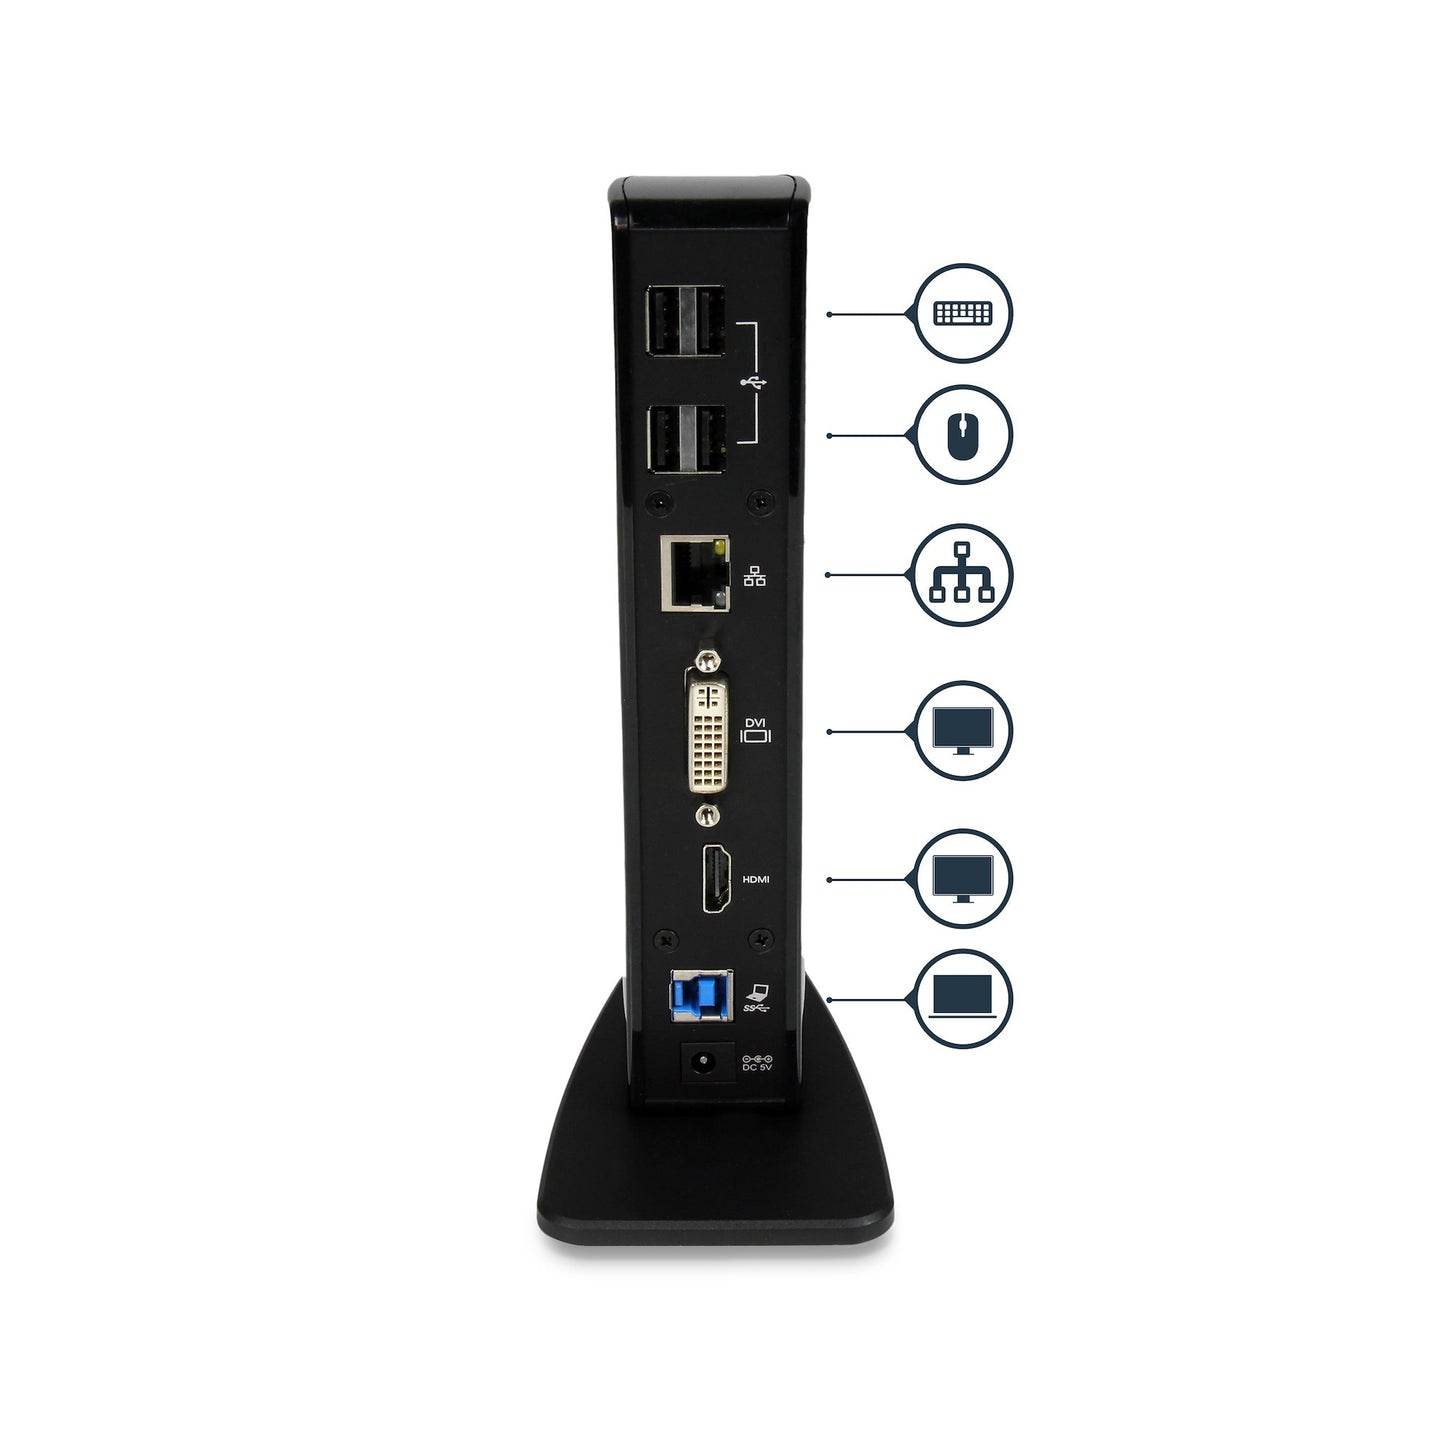 STARTECH CONSIG REPLICADOR DE PUERTOS DOCK UNIVERSAL USB 3.0 HDMI DVI .